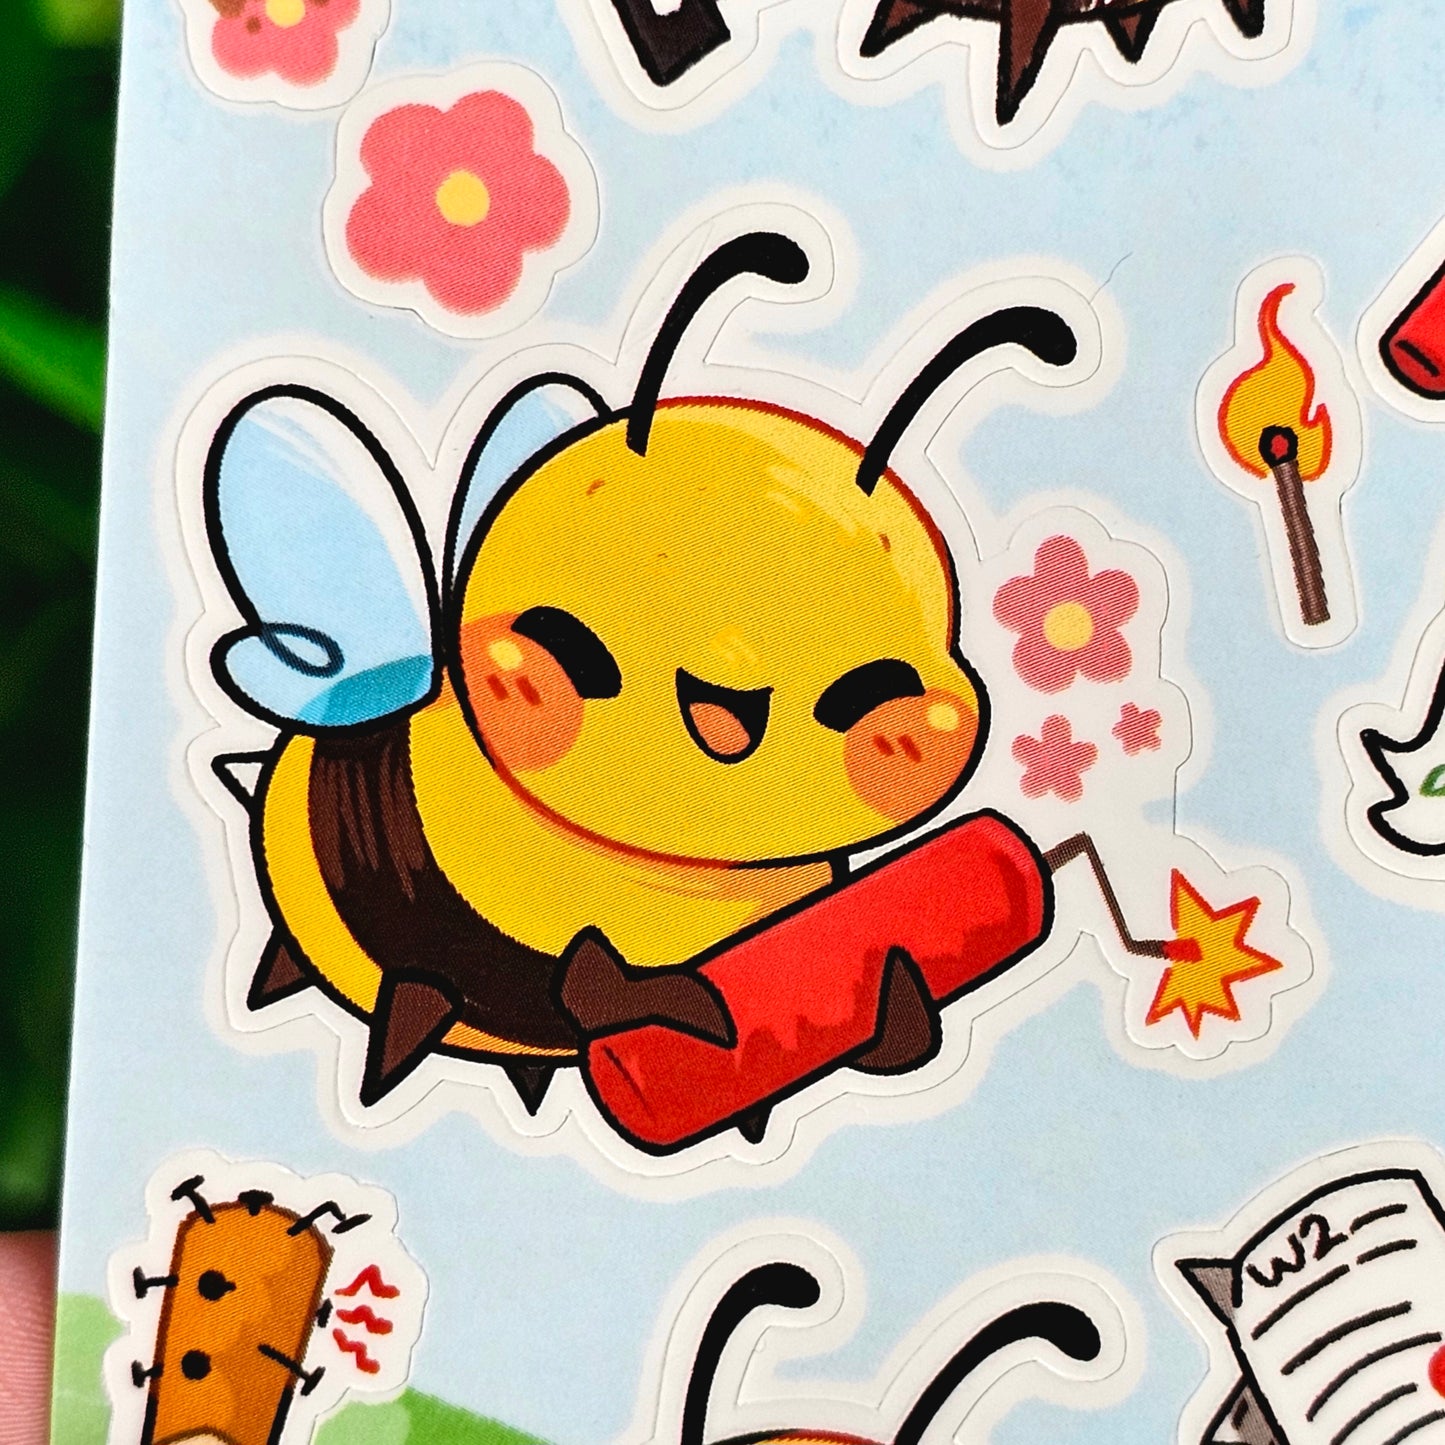 Chaotic Bees Sticker Sheet